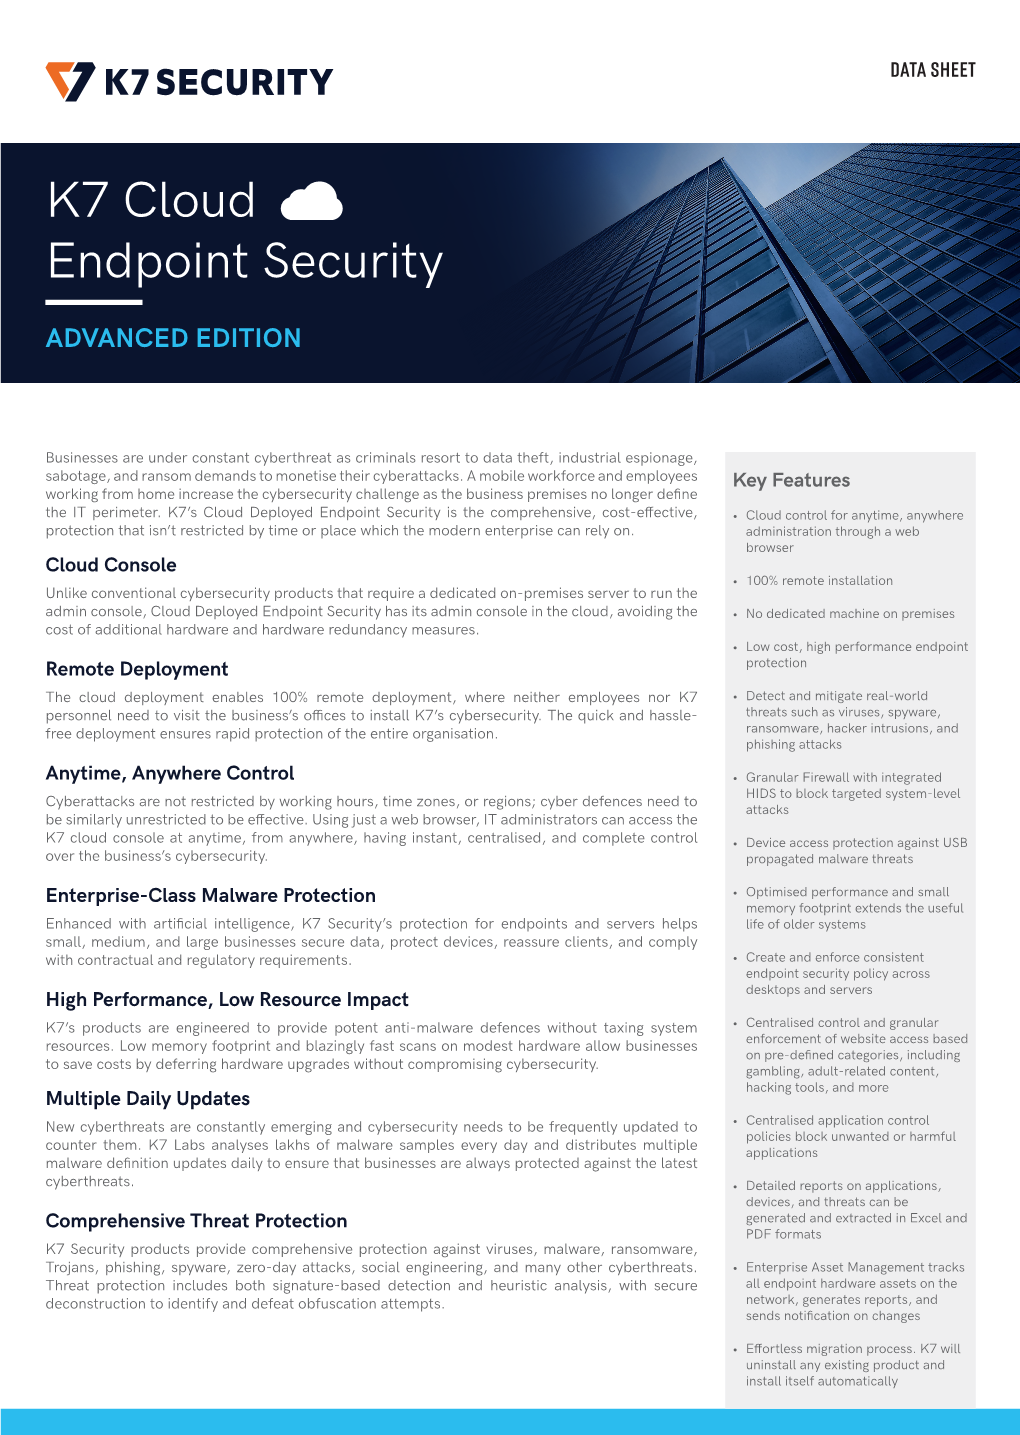 K7 Cloud Endpoint Security